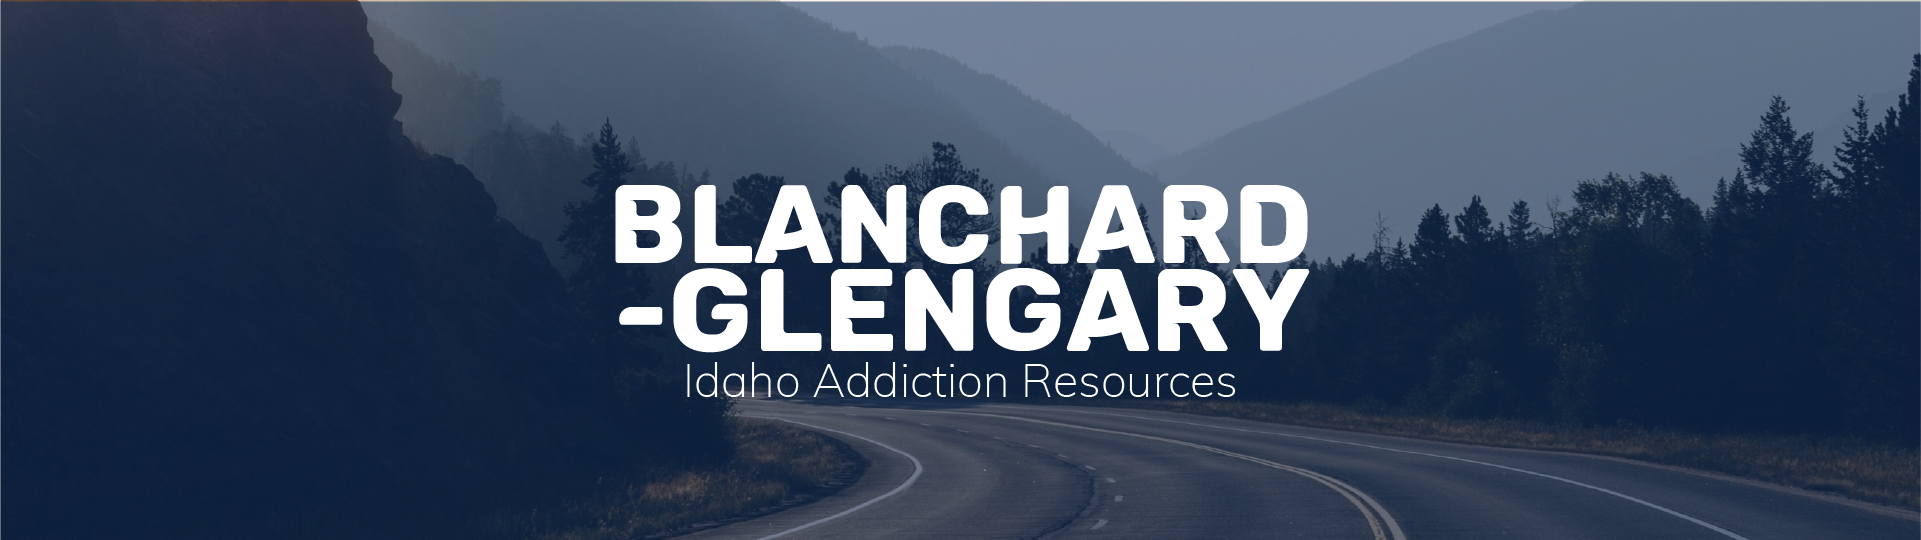 Blanchard Glengary, Idaho addiction resources